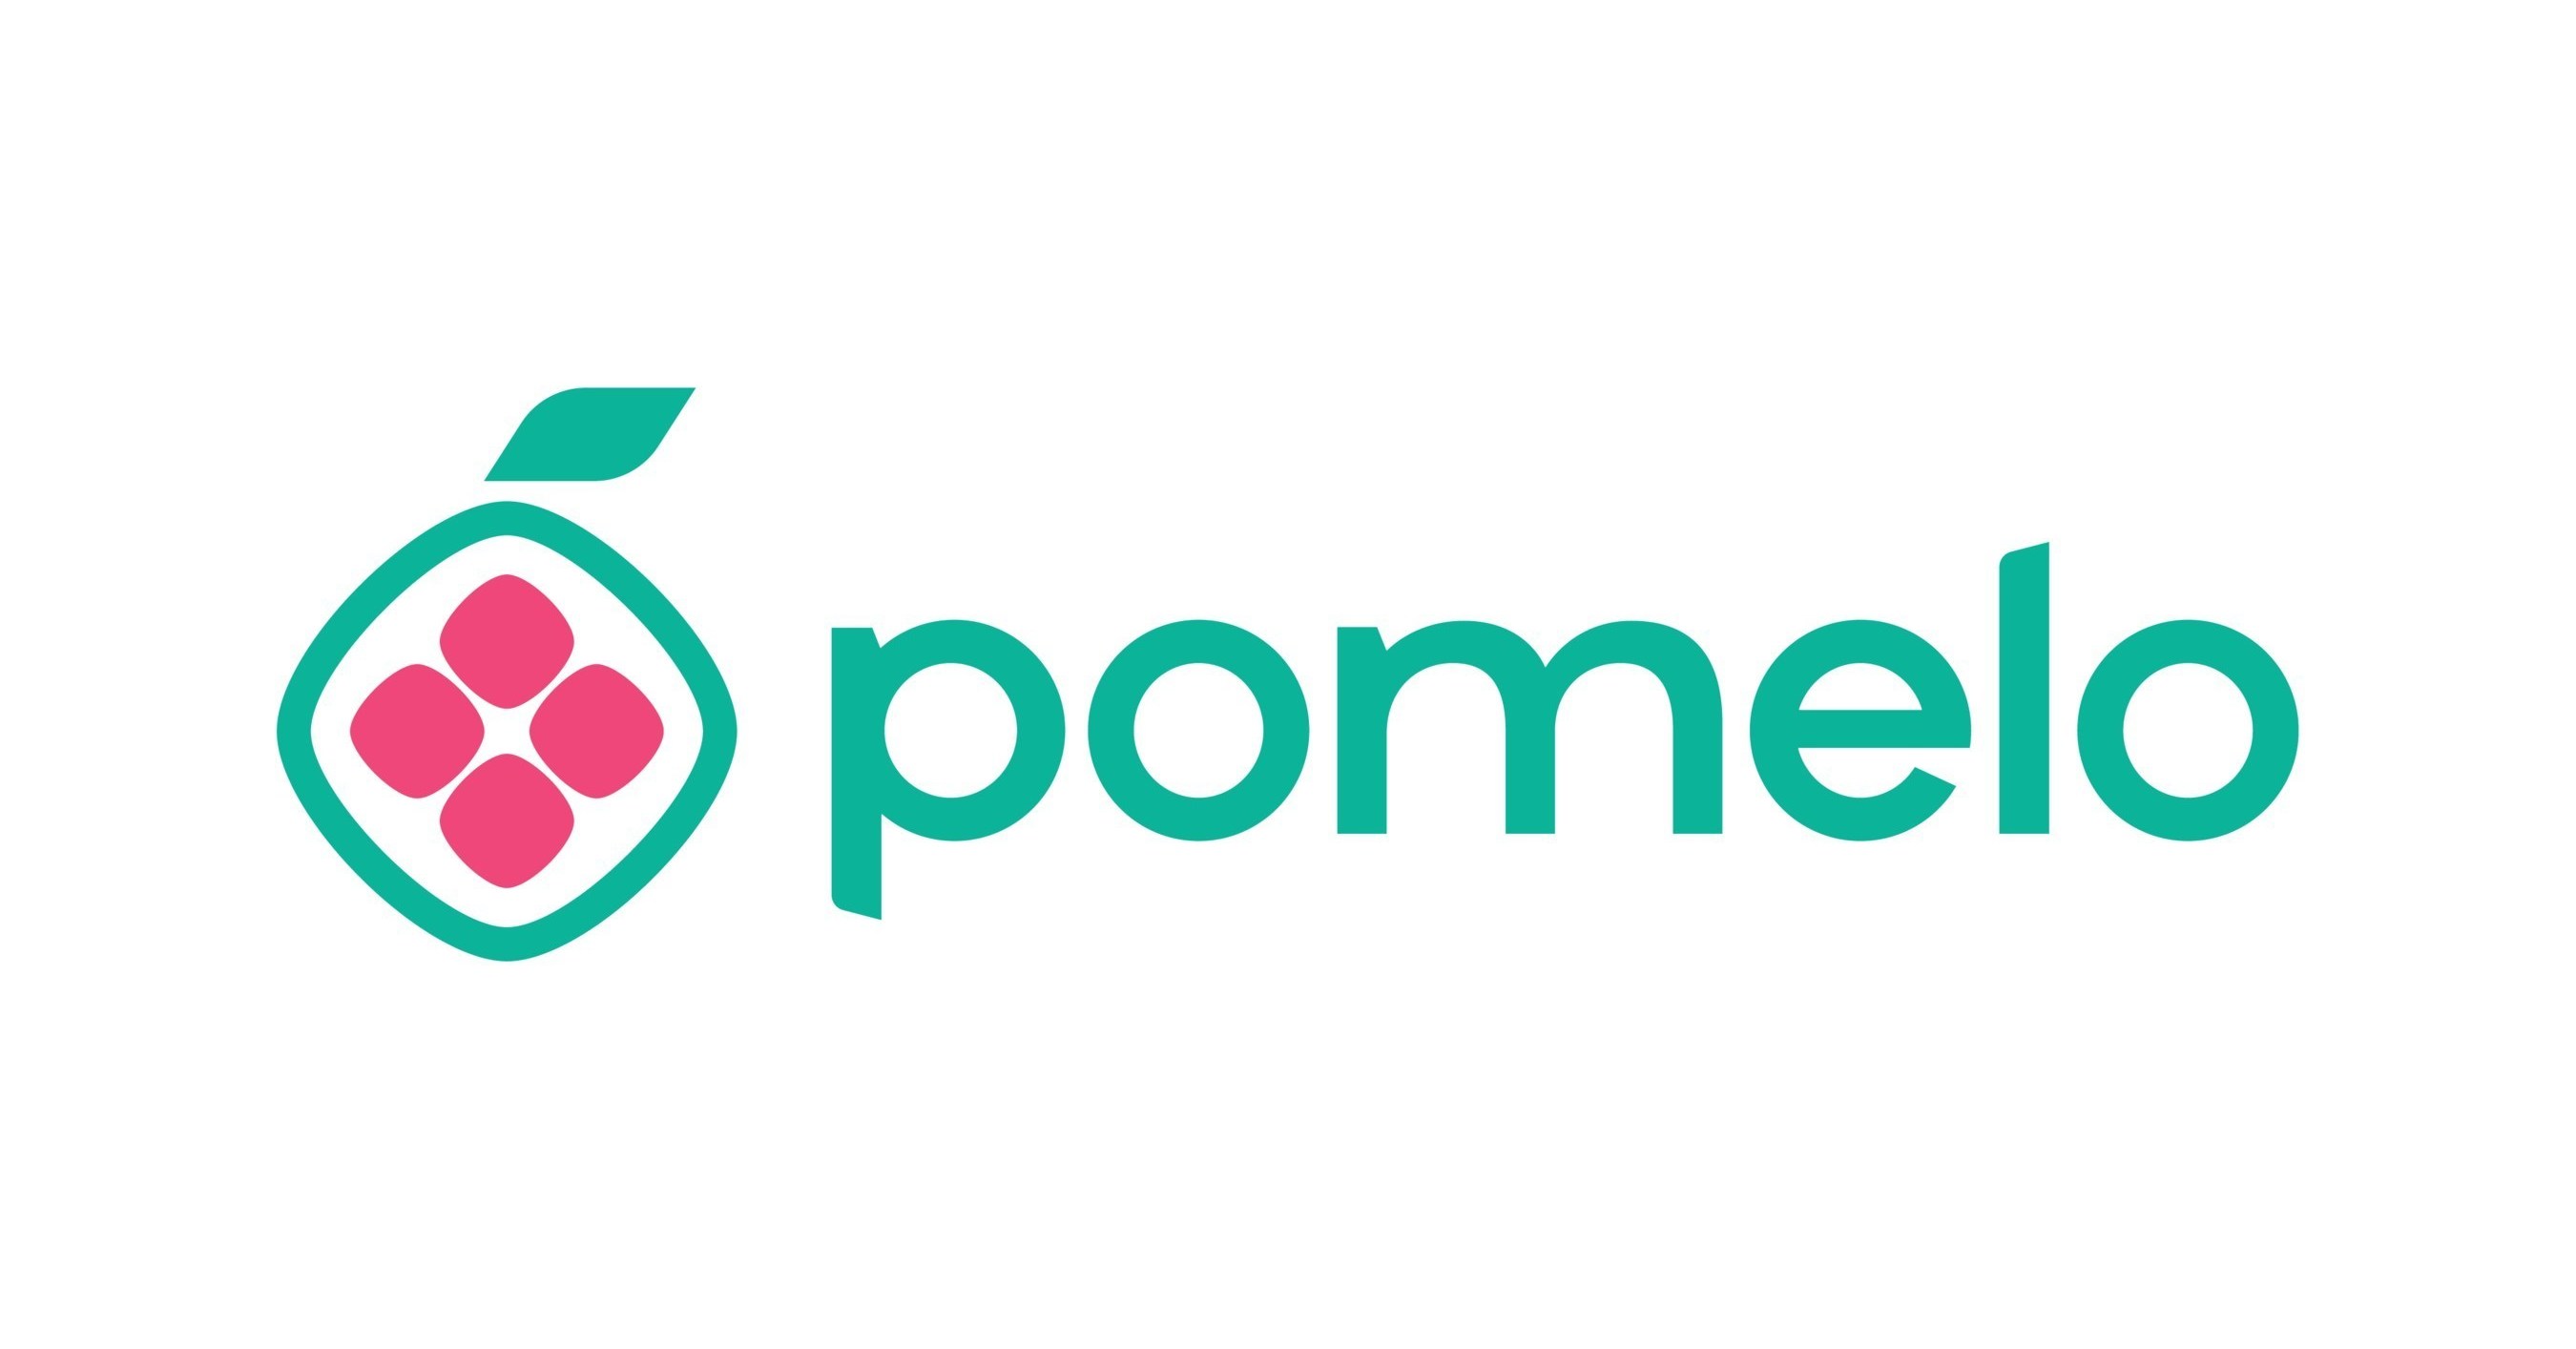 Pomelo startup company logo